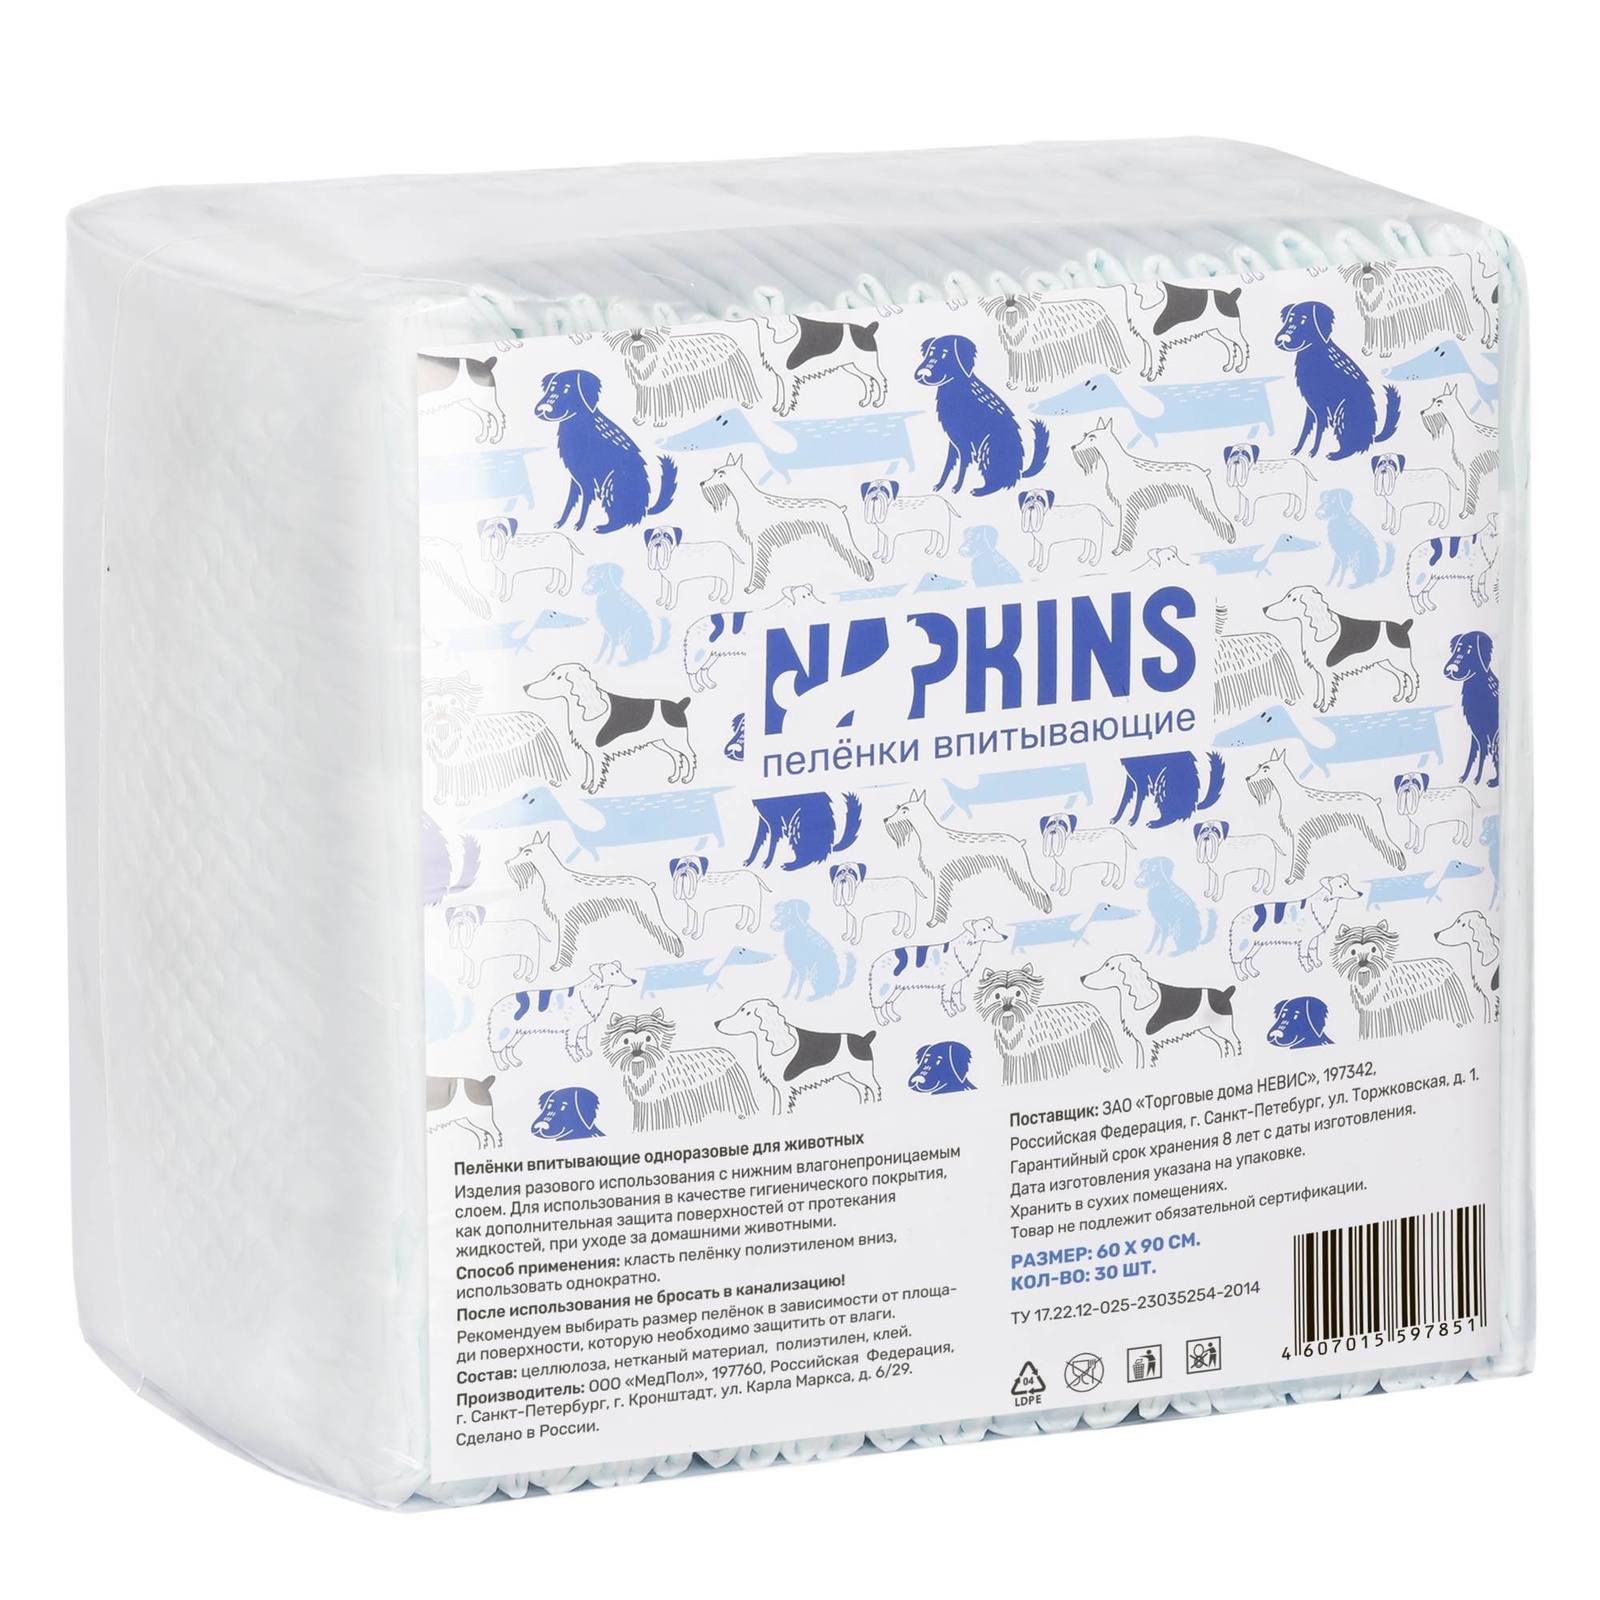 NAPKINS NAPKINS впитывающие пелёнки с целлюлозой для собак 60х90 (100 г) napkins napkins впитывающие пелёнки с целлюлозой классические 60х40 30 шт